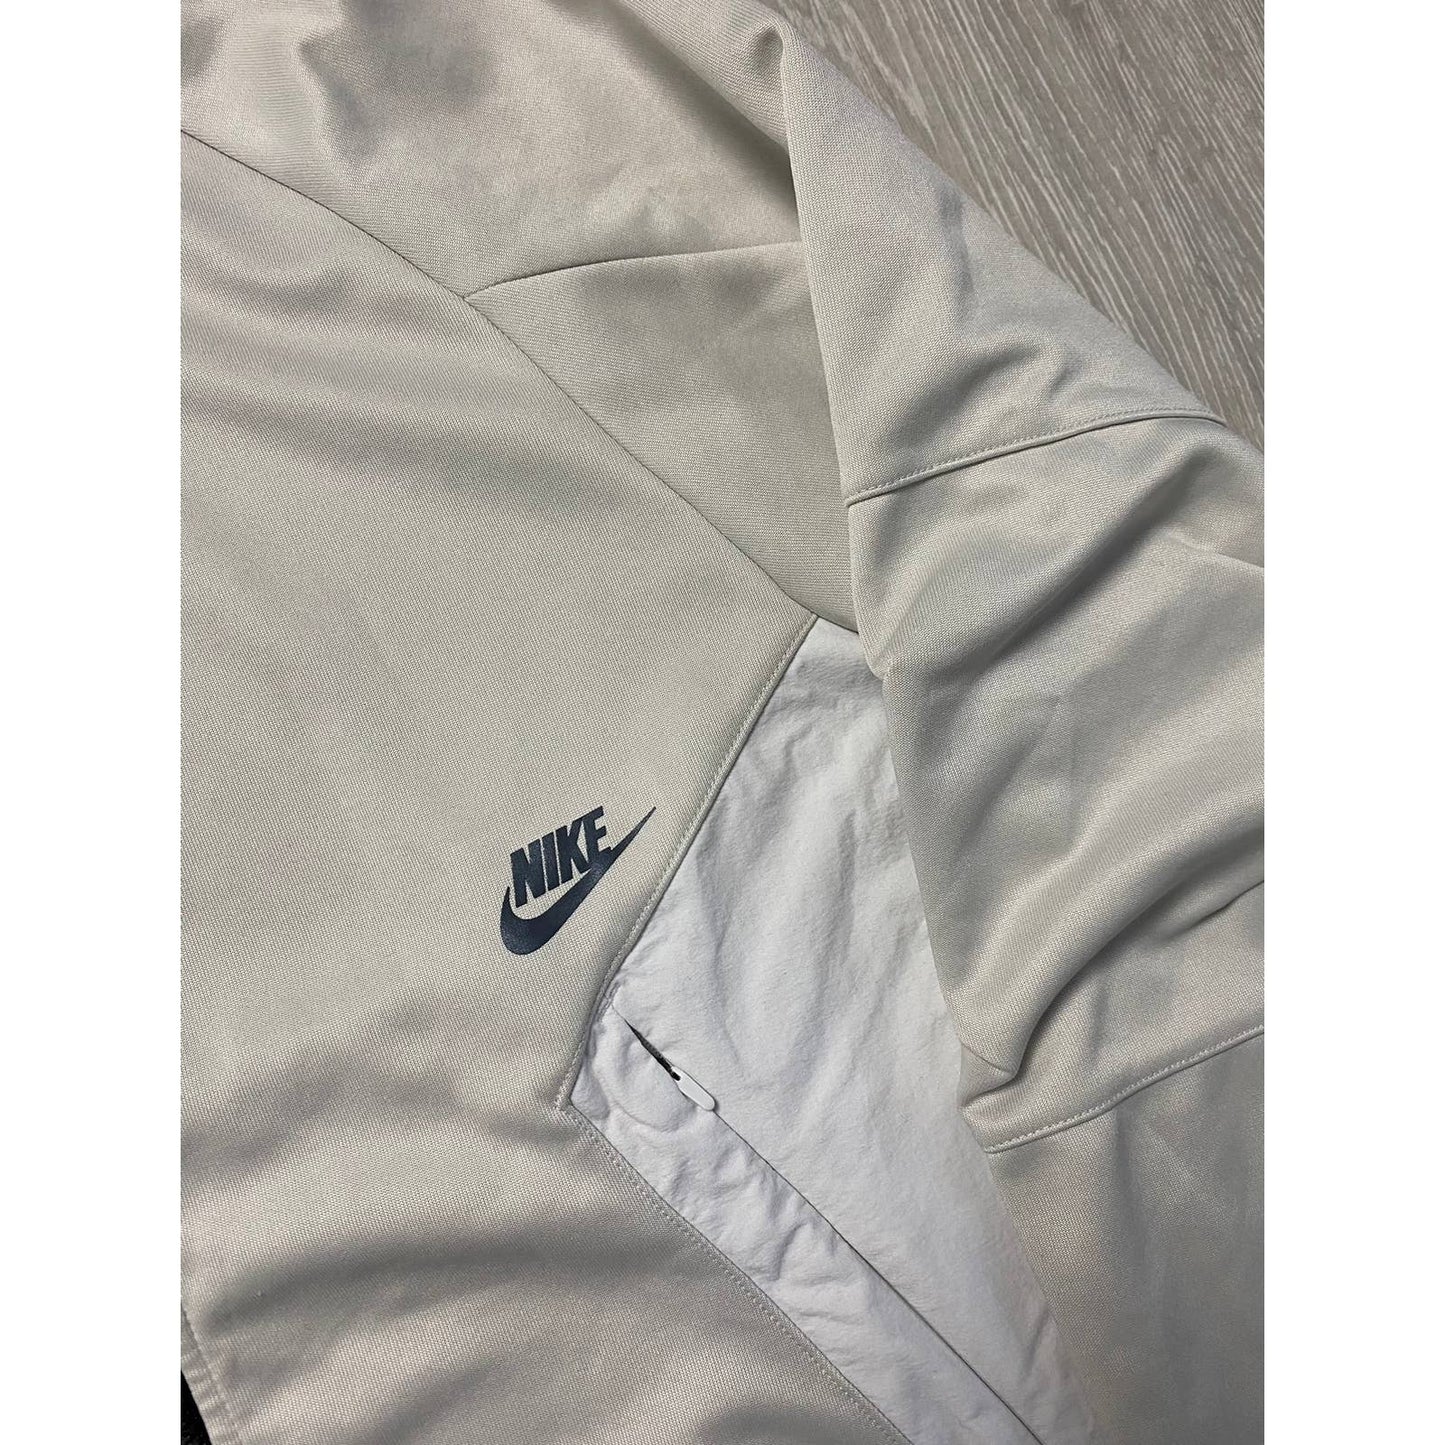 Nike Air Max vintage track suit cream beige tech fleece